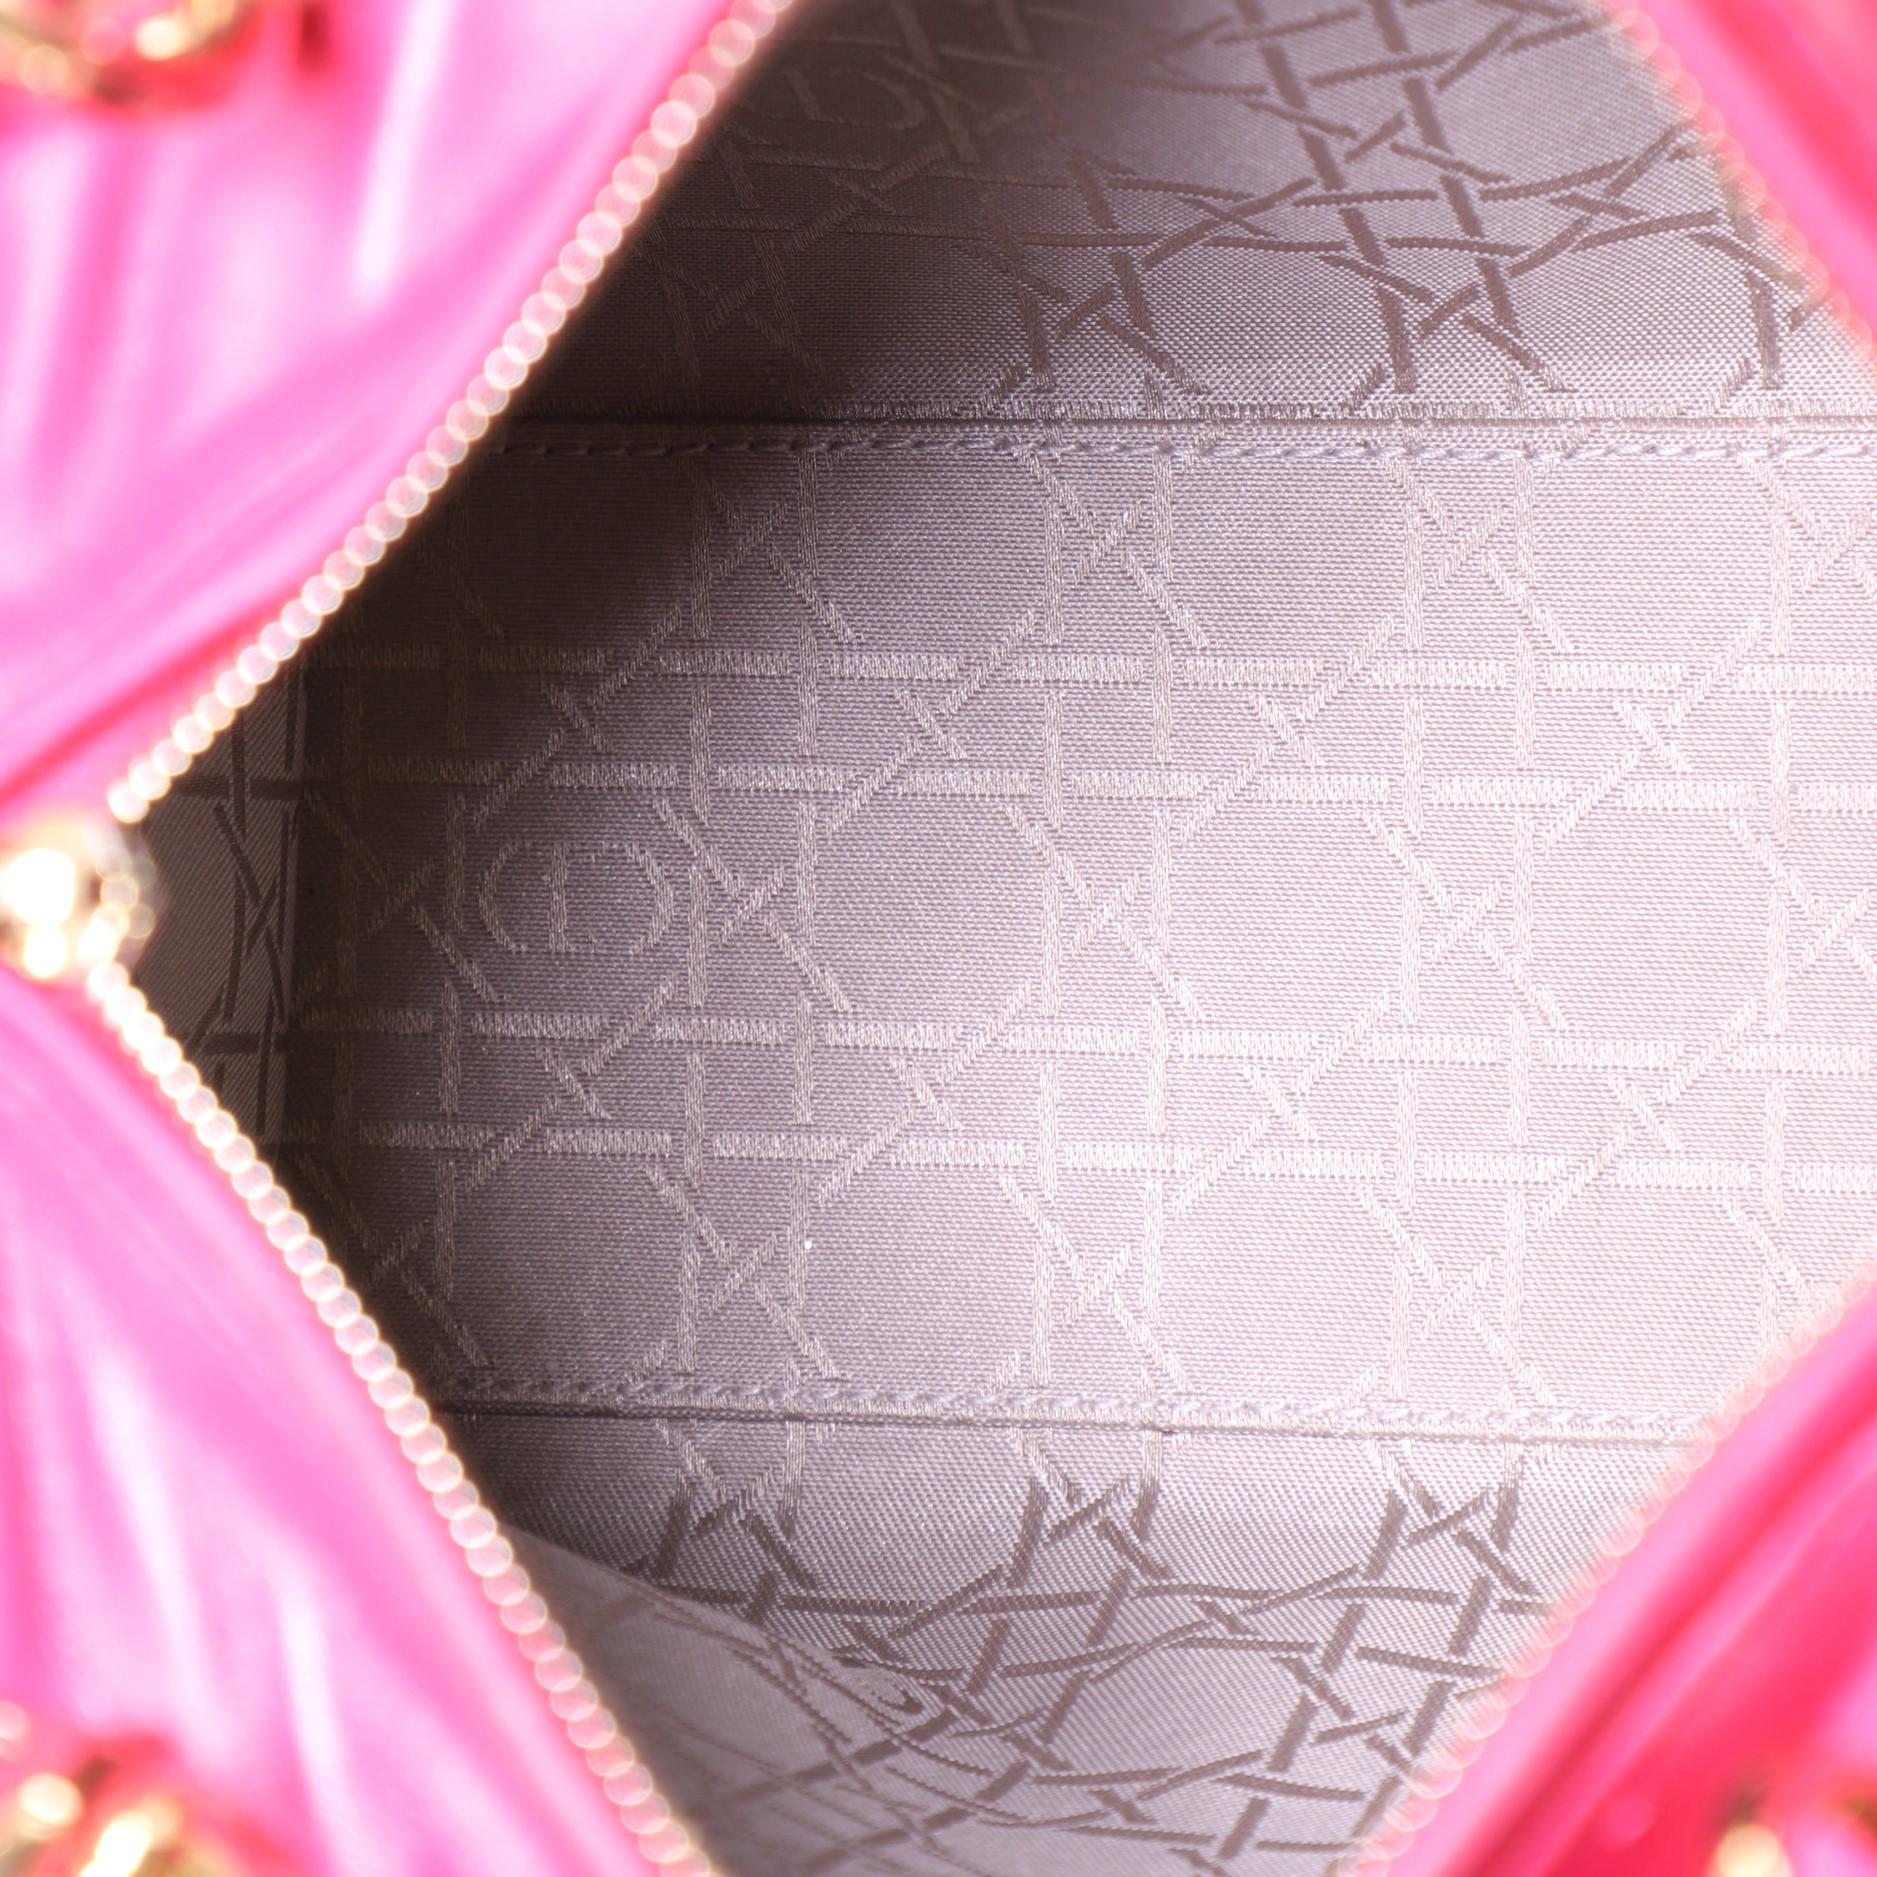 Red Christian Dior Lady Dior Bag Cannage Quilt Lambskin Medium